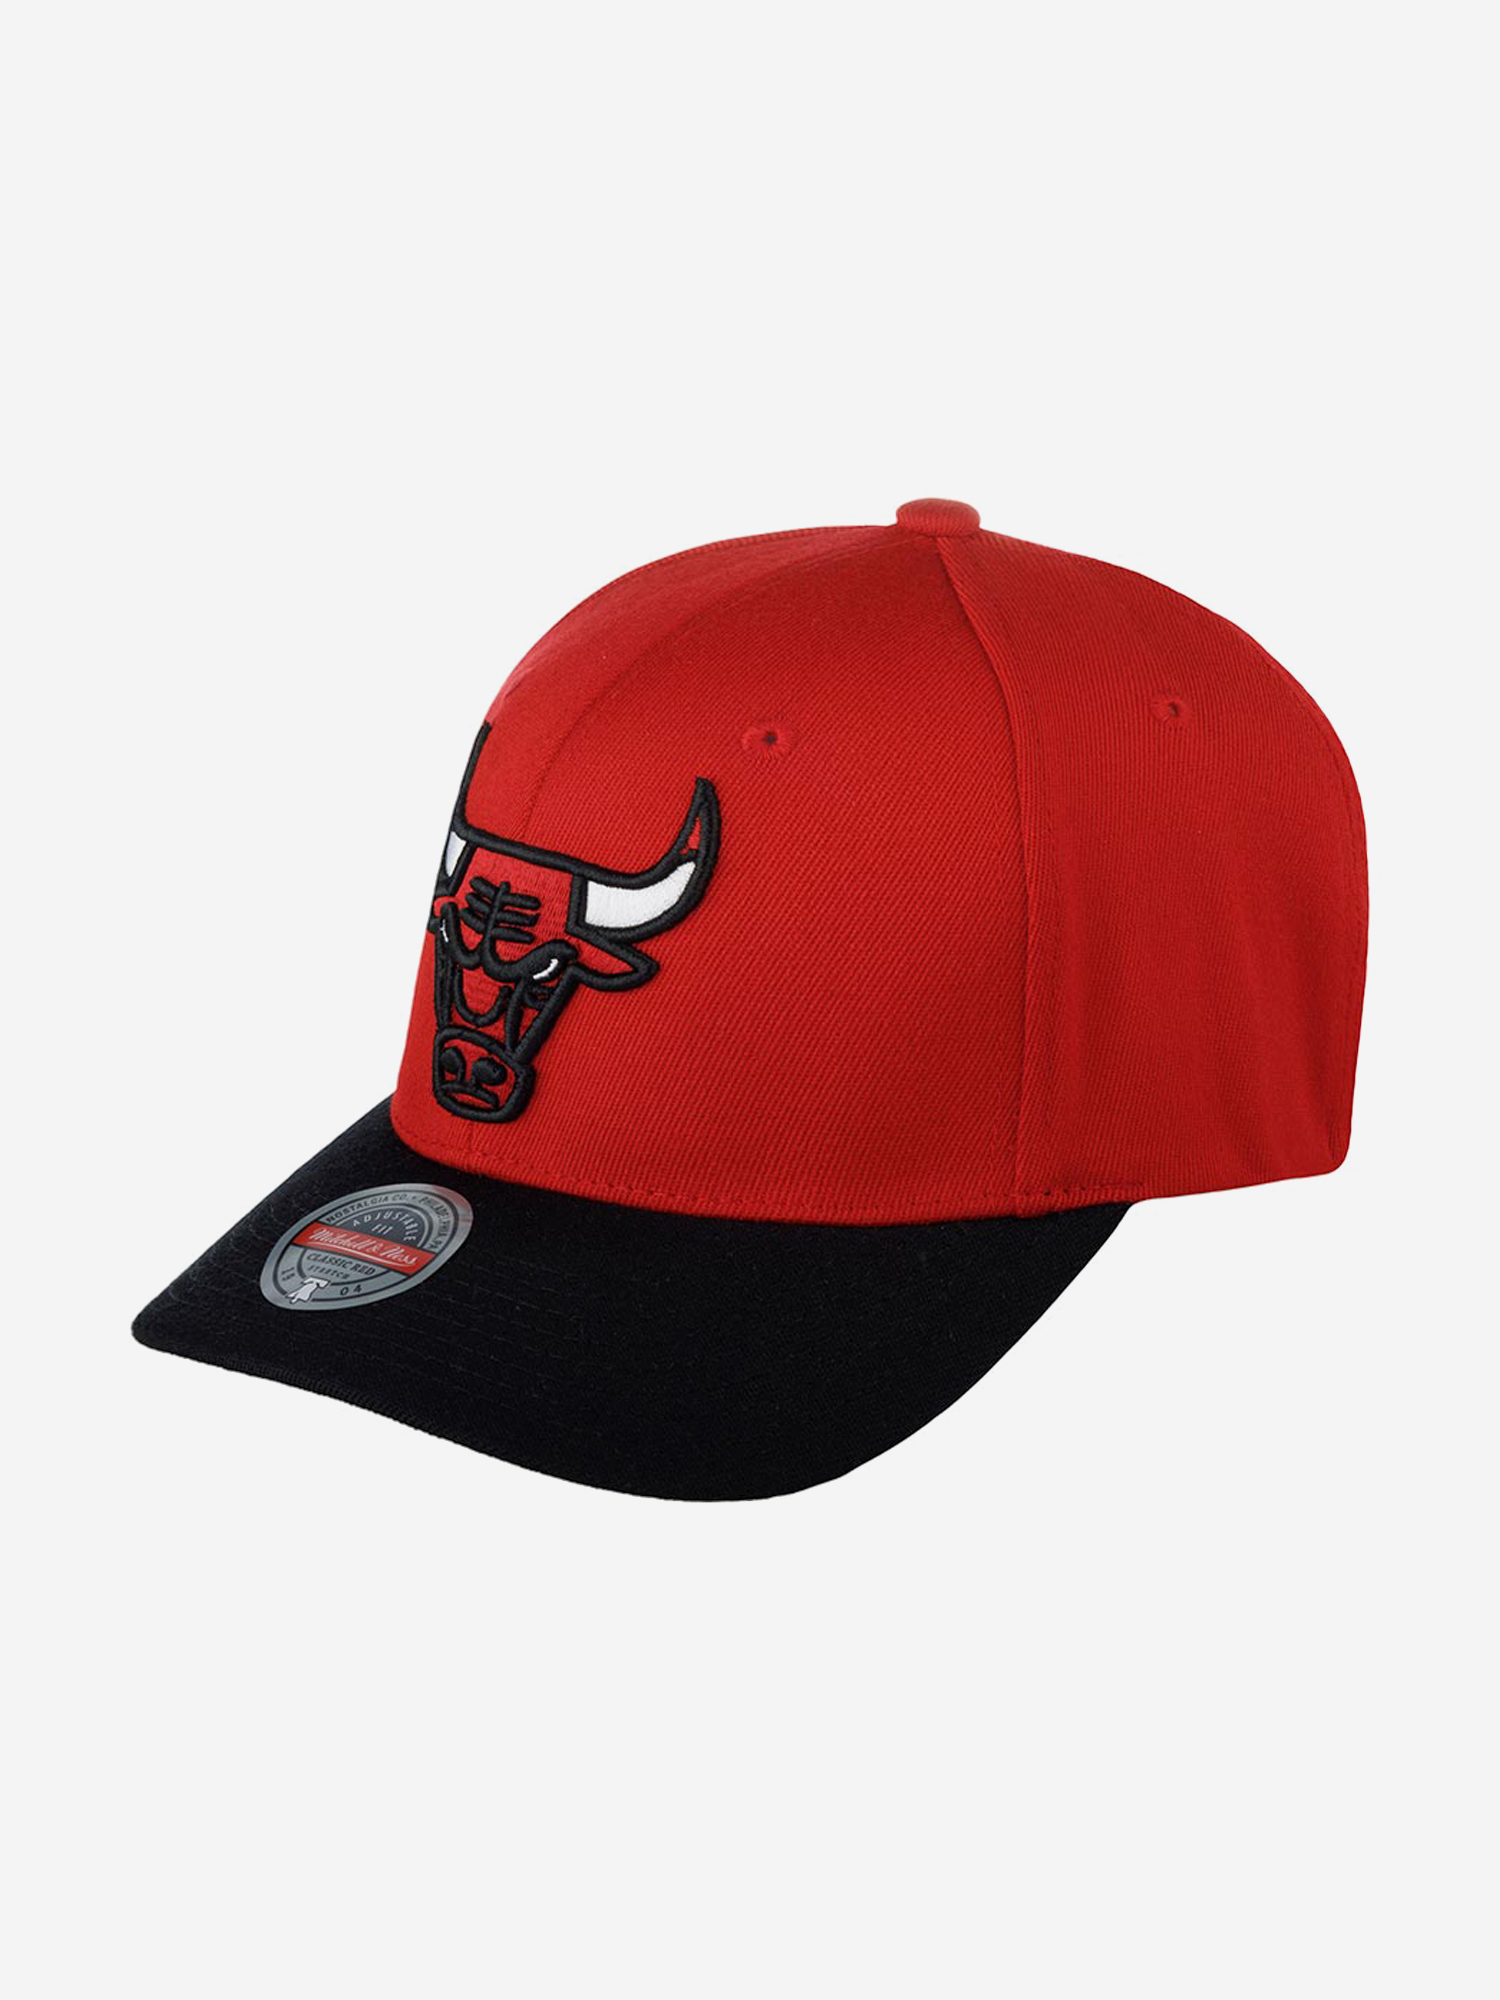 Бейсболка MITCHELL NESS HHSS3265-CBUYYPPPRDBK Chicago Bulls NBA (красный), Красный